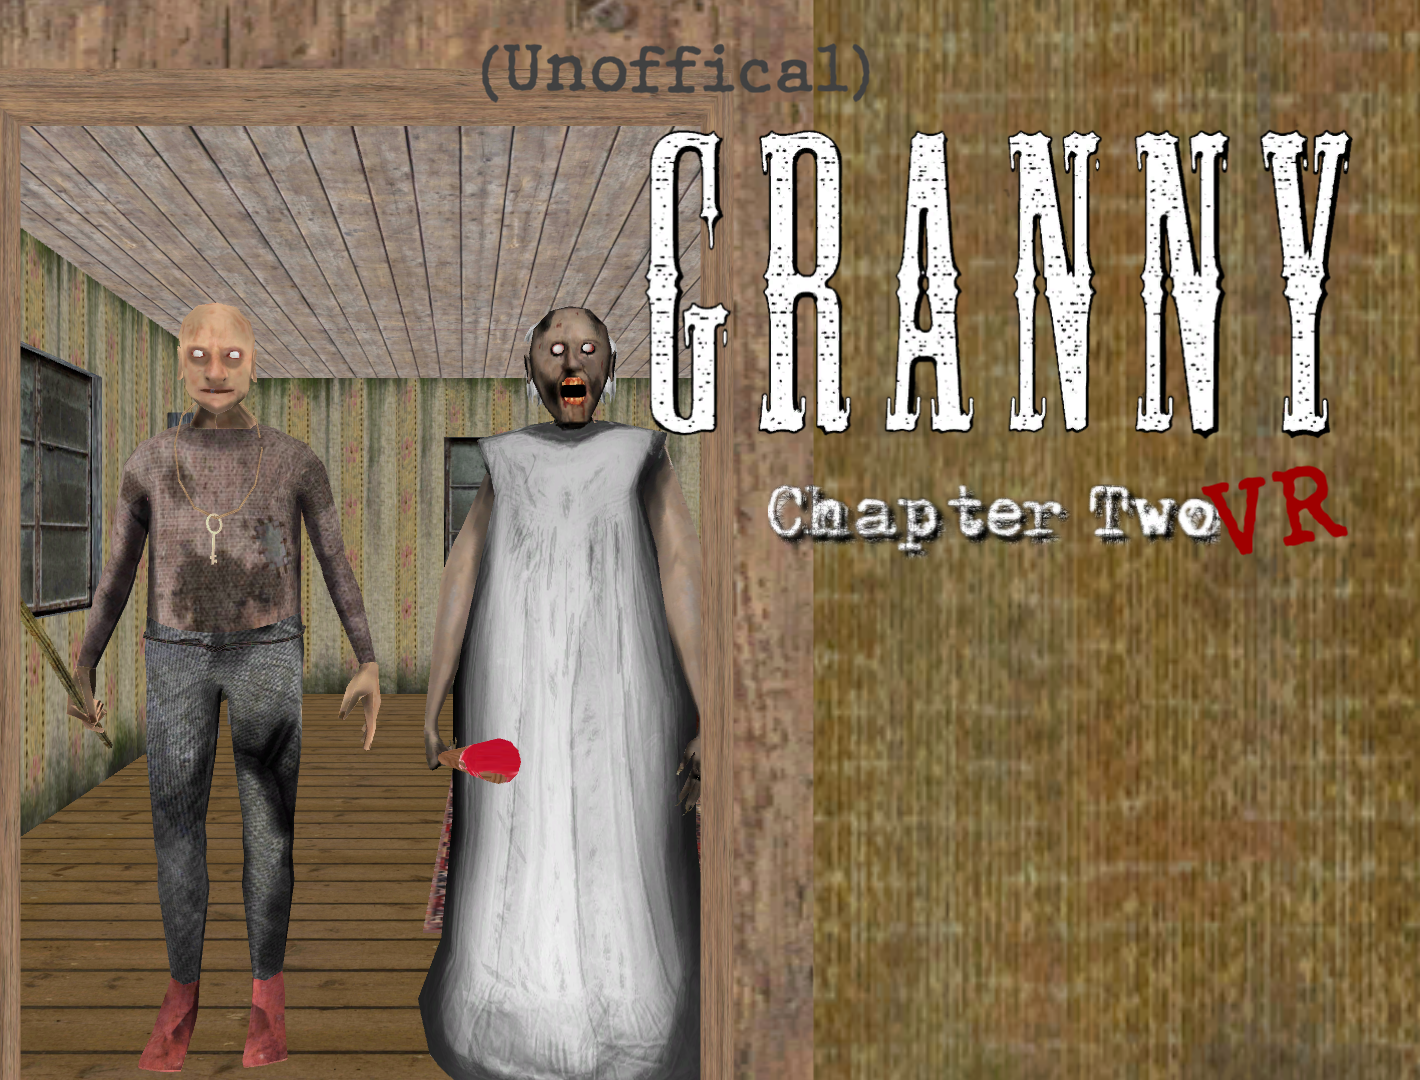 Granny online - granny games online